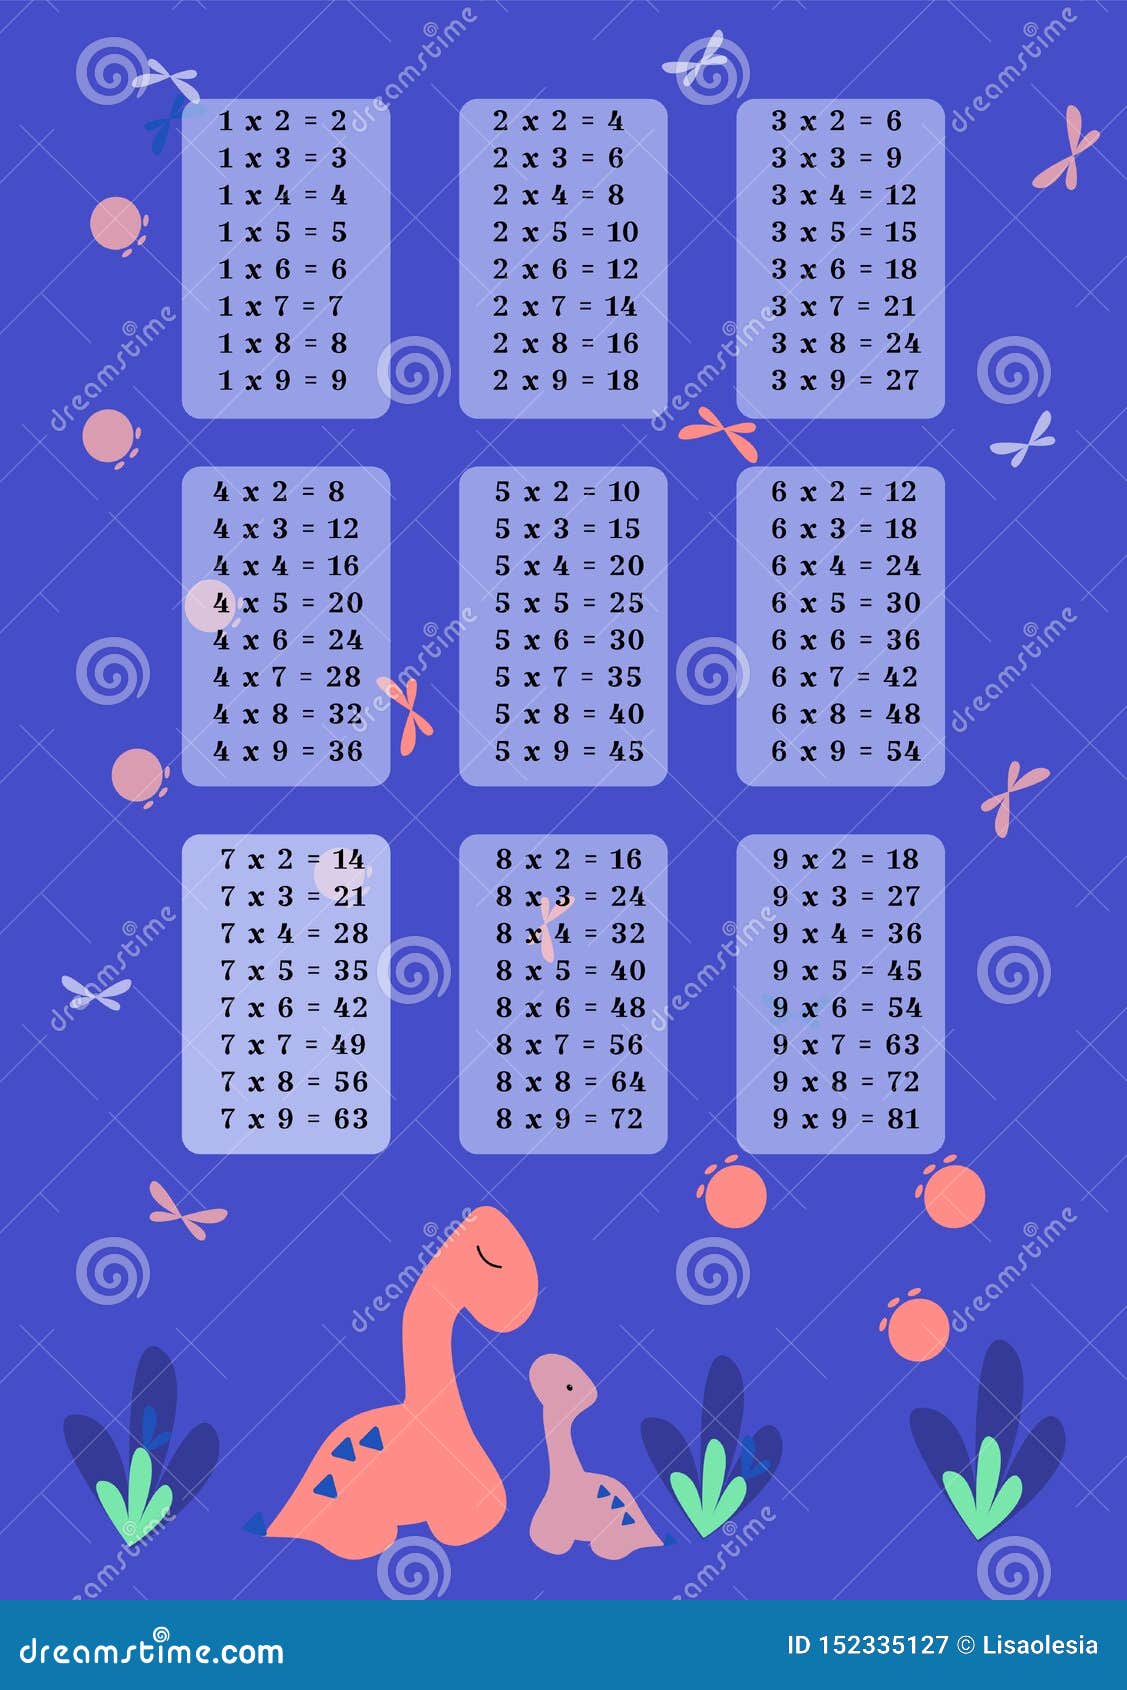 Multiplication Table Chart For Kids